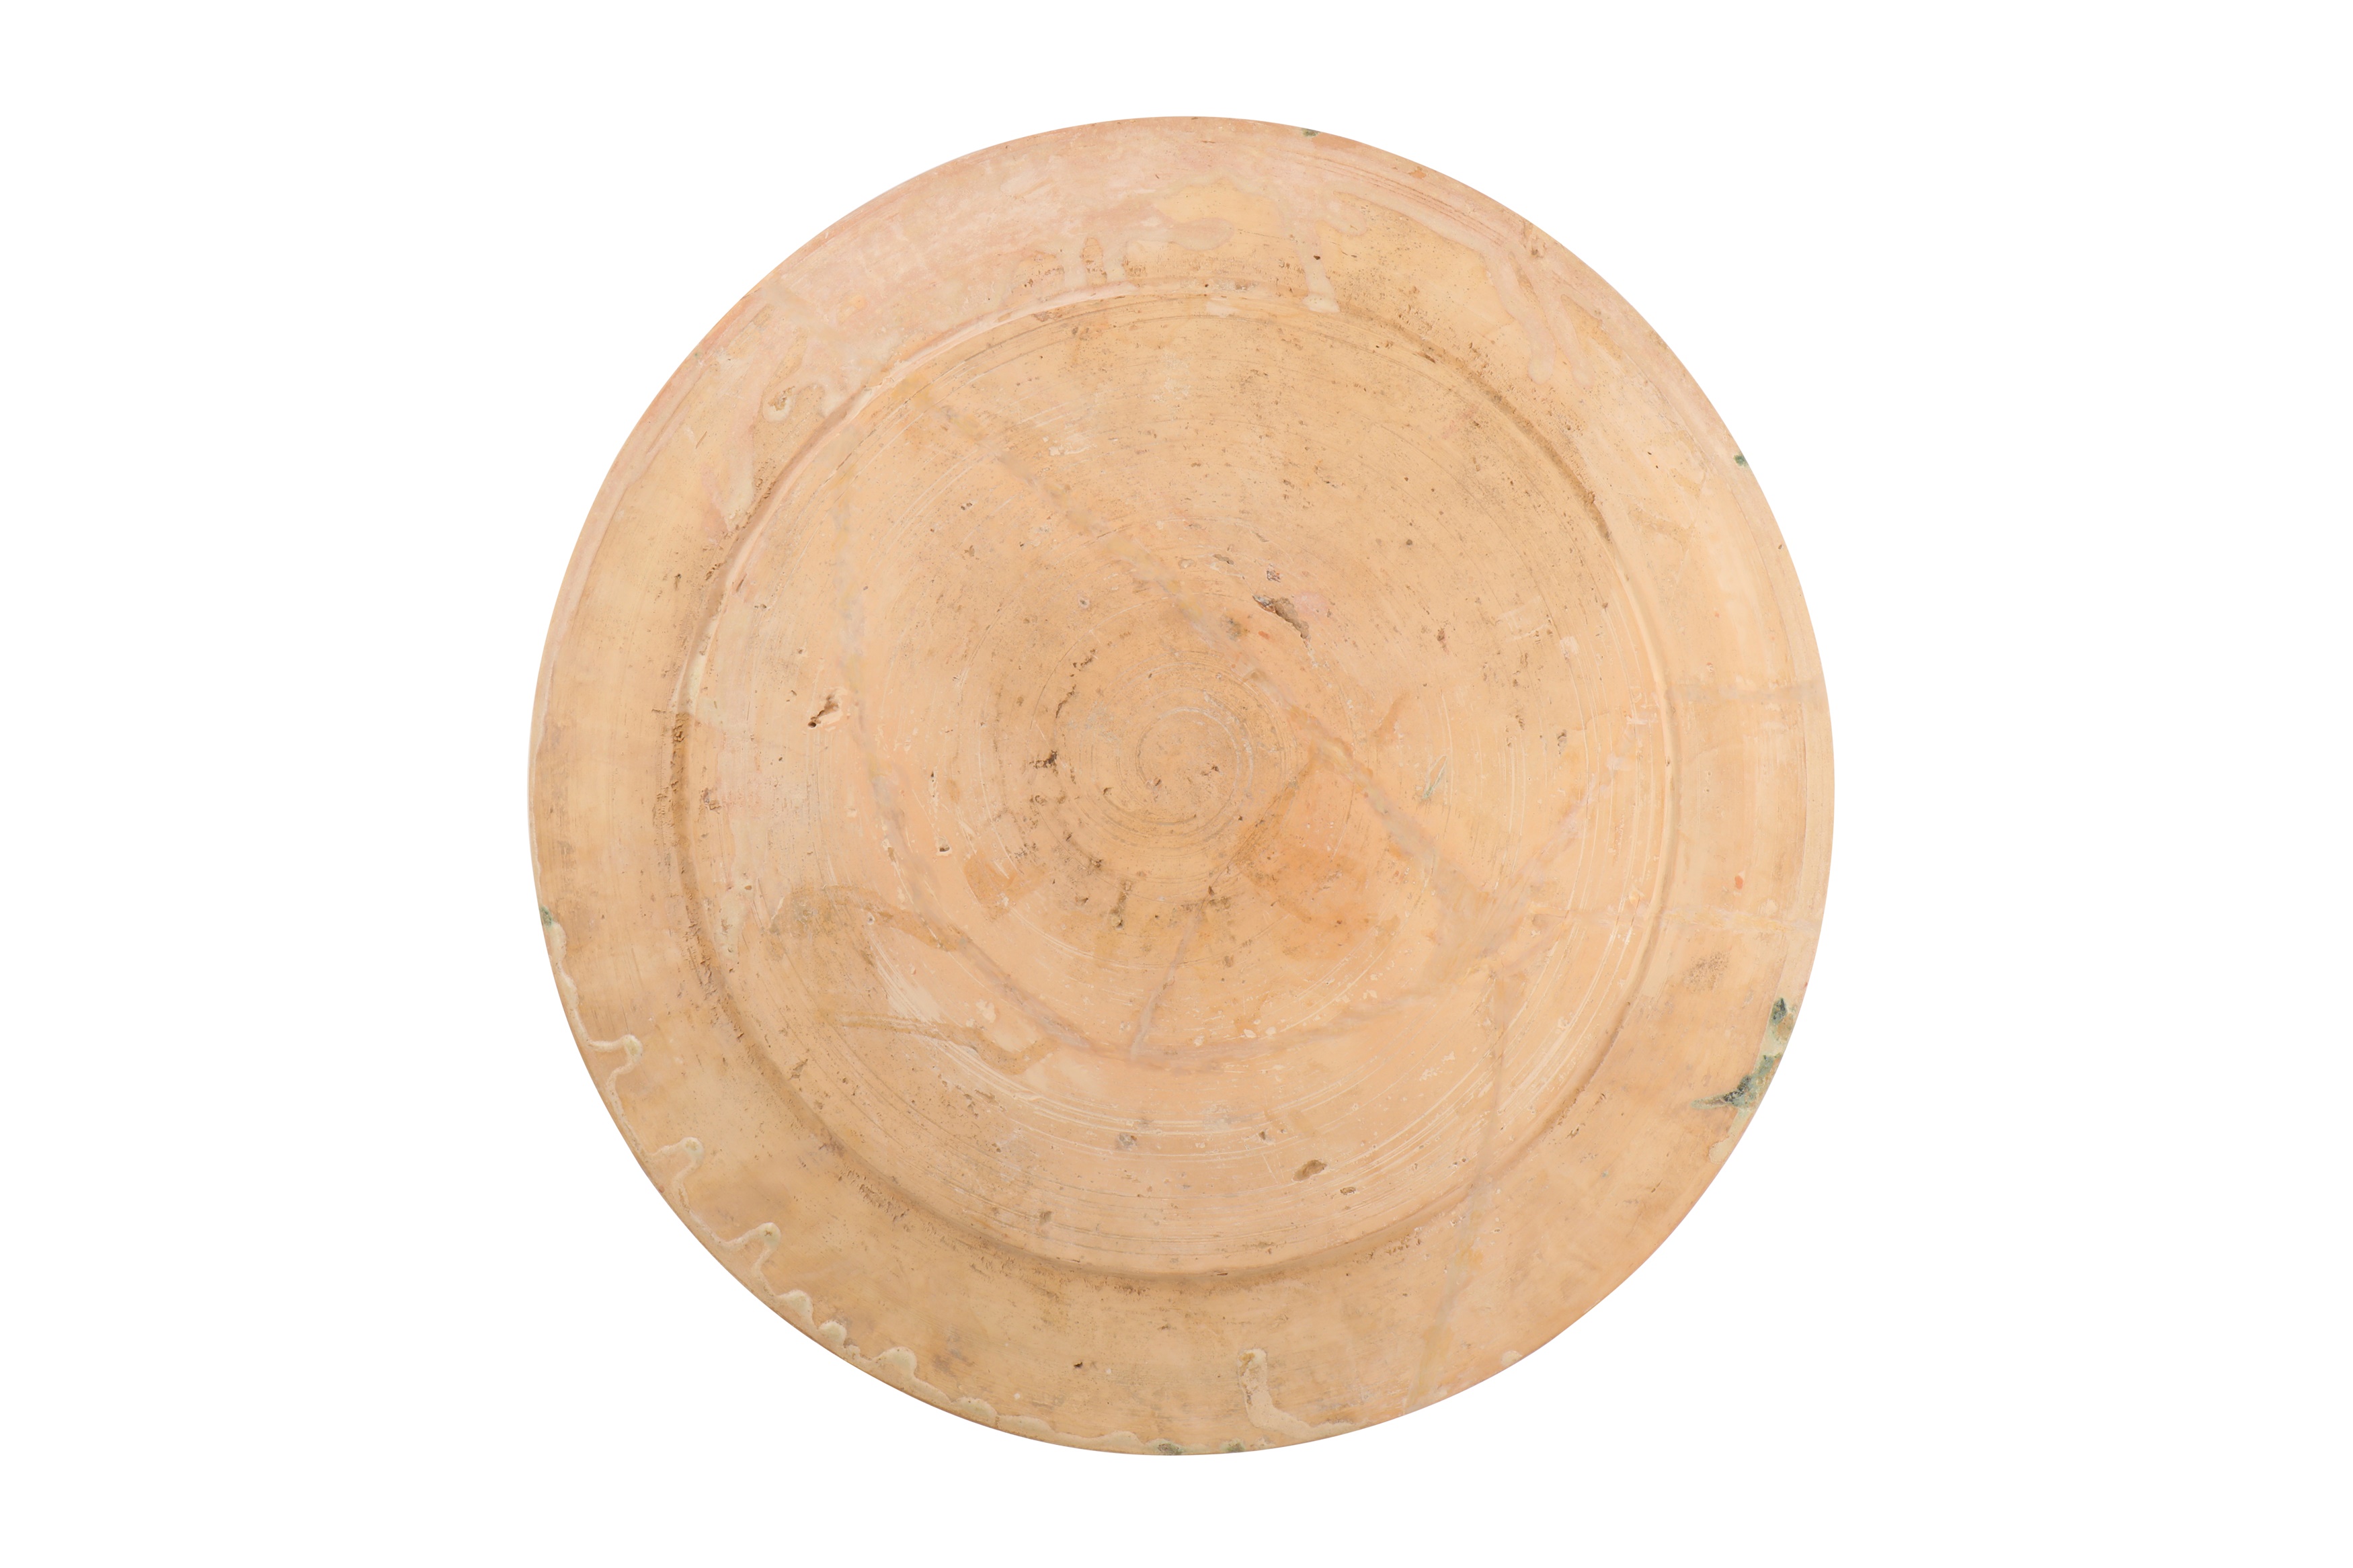 A RARE LARGE 9TH-10TH CENTURY MESOPOTAMIAN/ABBASID GLAZED POTTERY FLAT DISH - Image 3 of 3